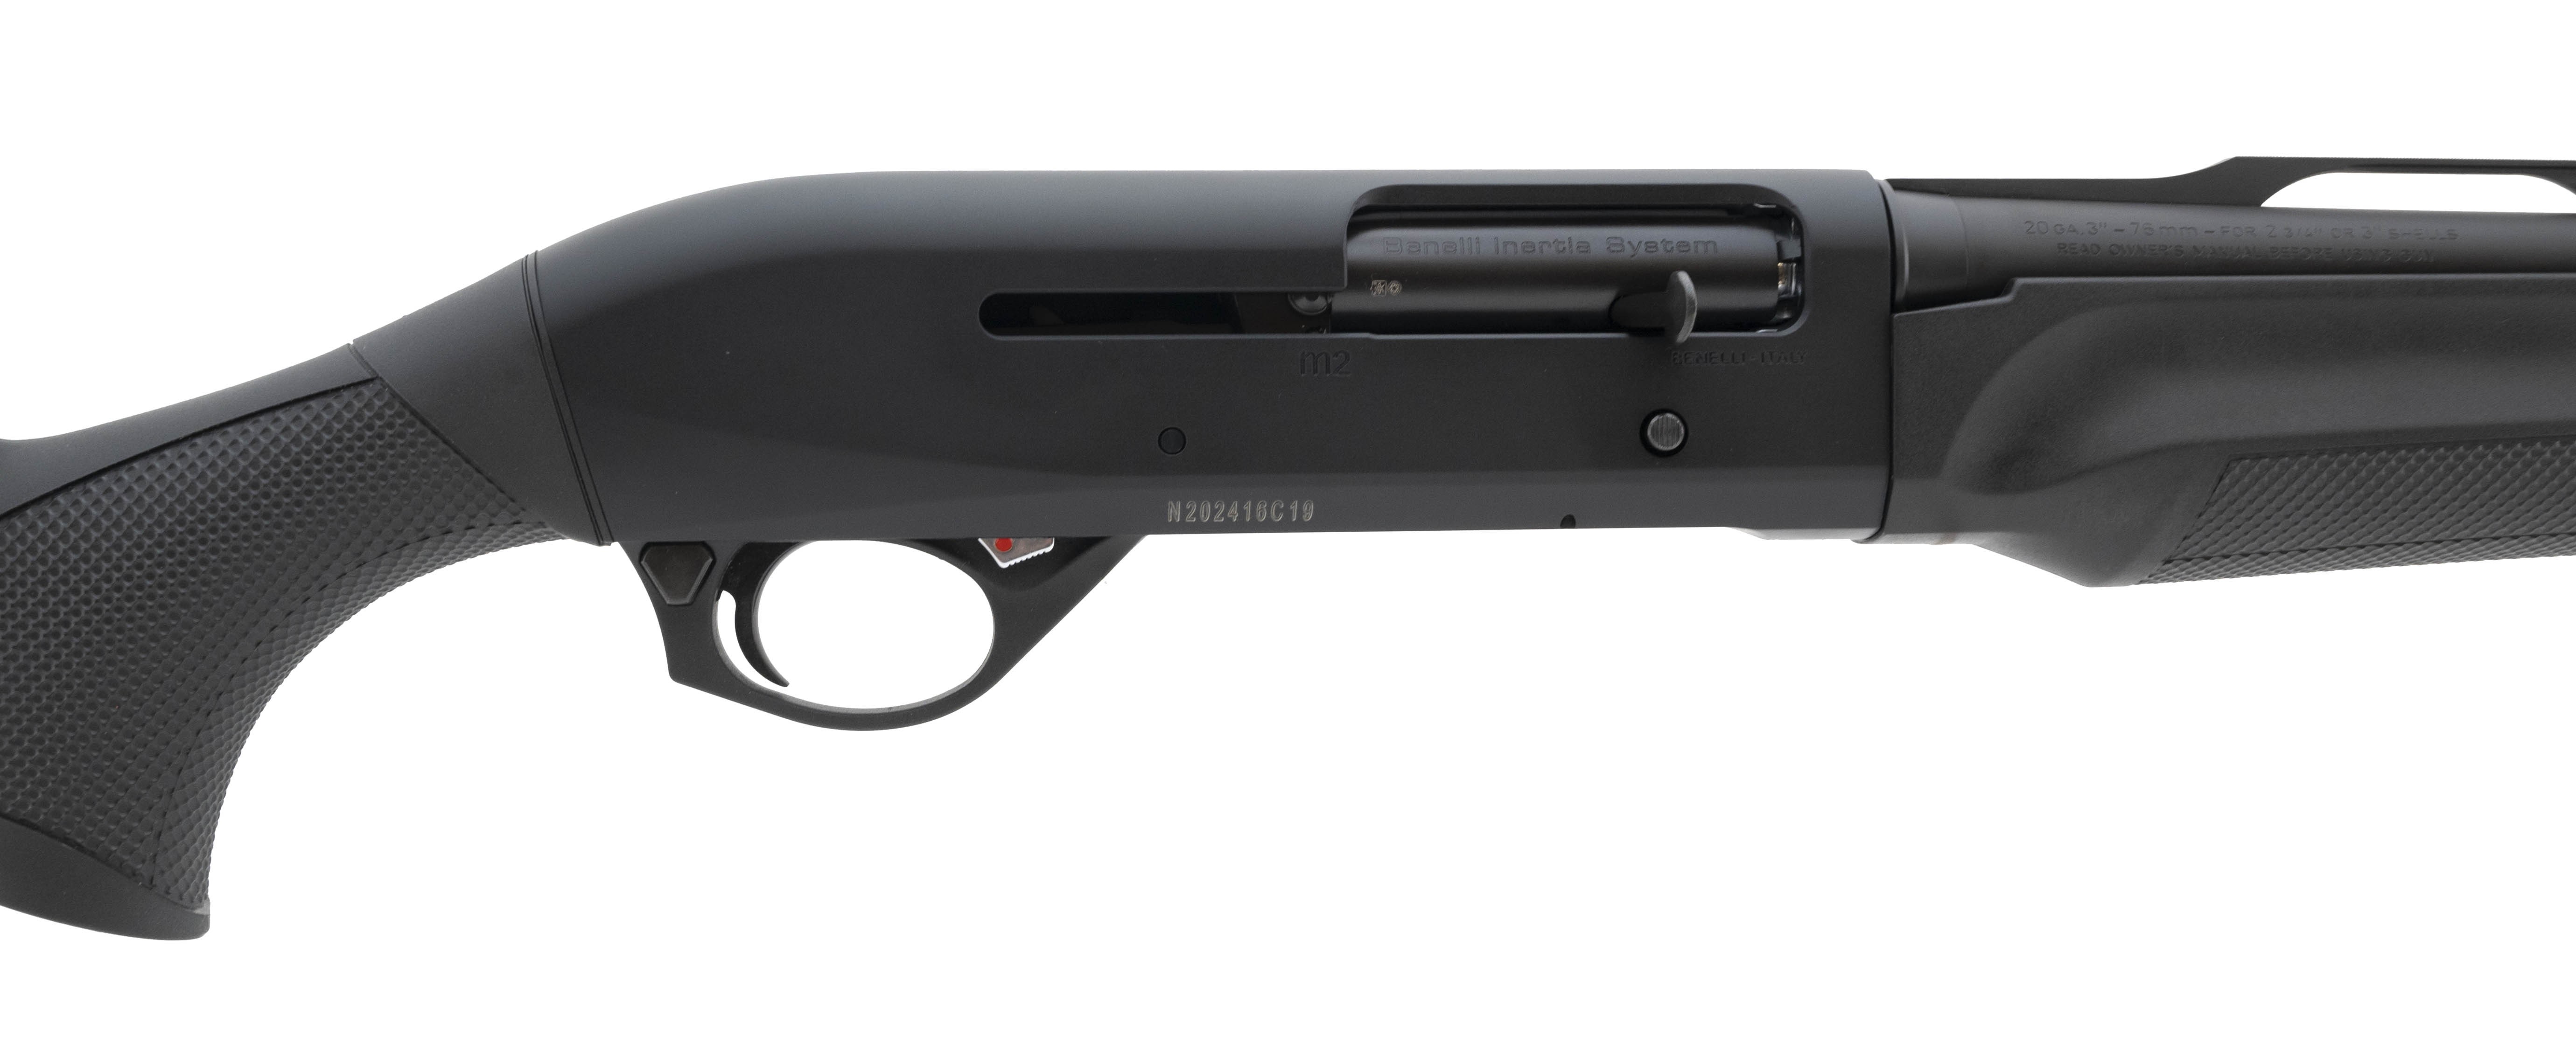 Benelli M2 20 Gauge shotgun for sale.